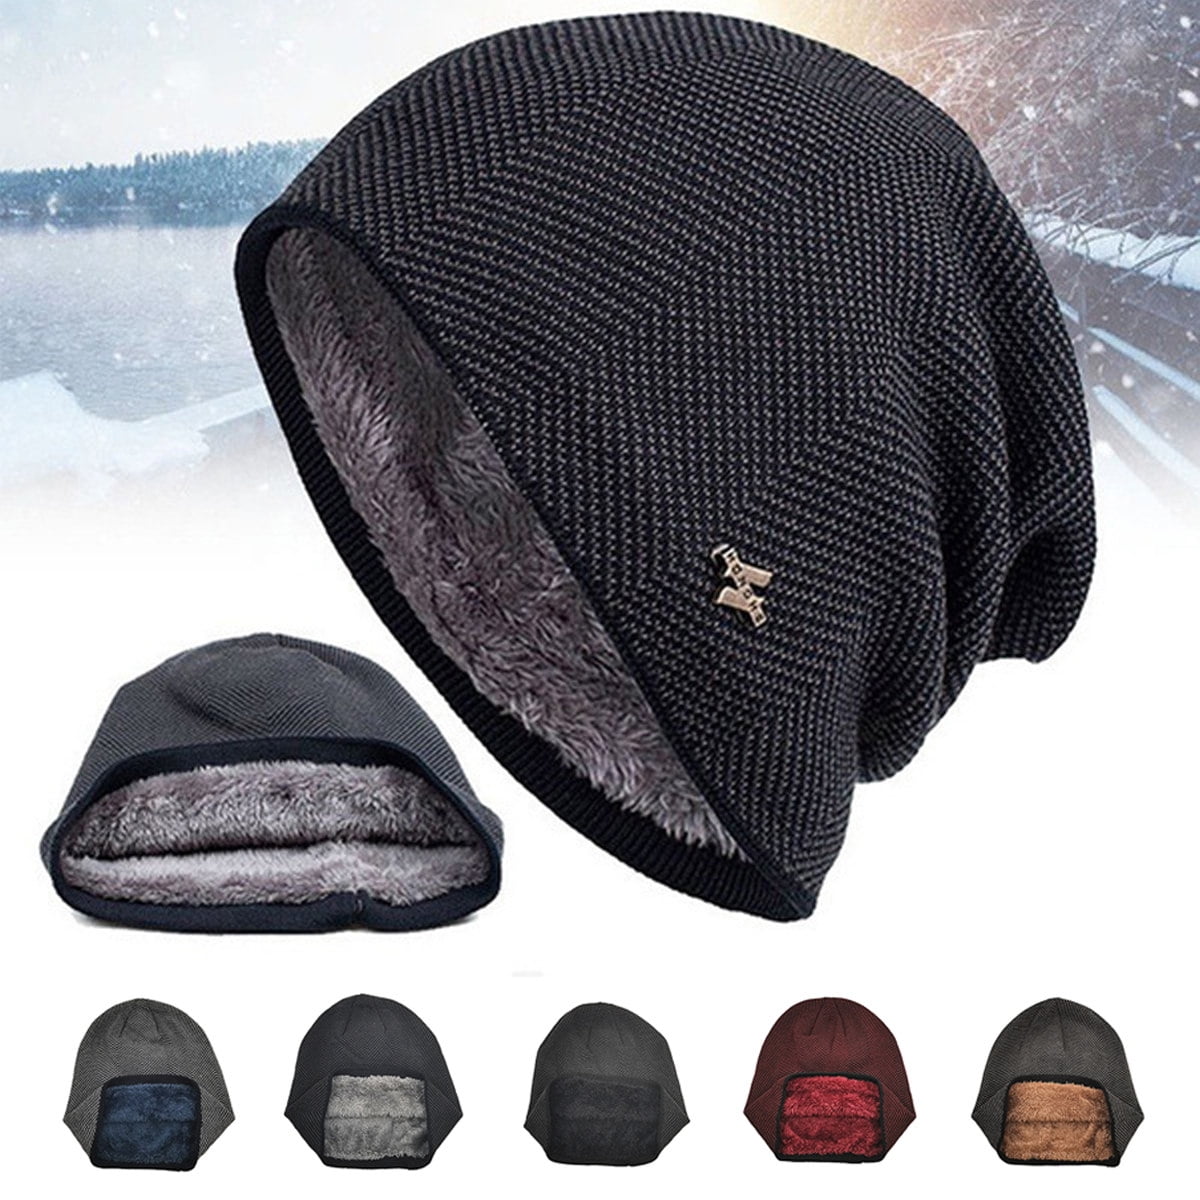 ZOELNIC Men's Slouchy Beanie Hat Over-sized Skull Cap Winter Warm ...